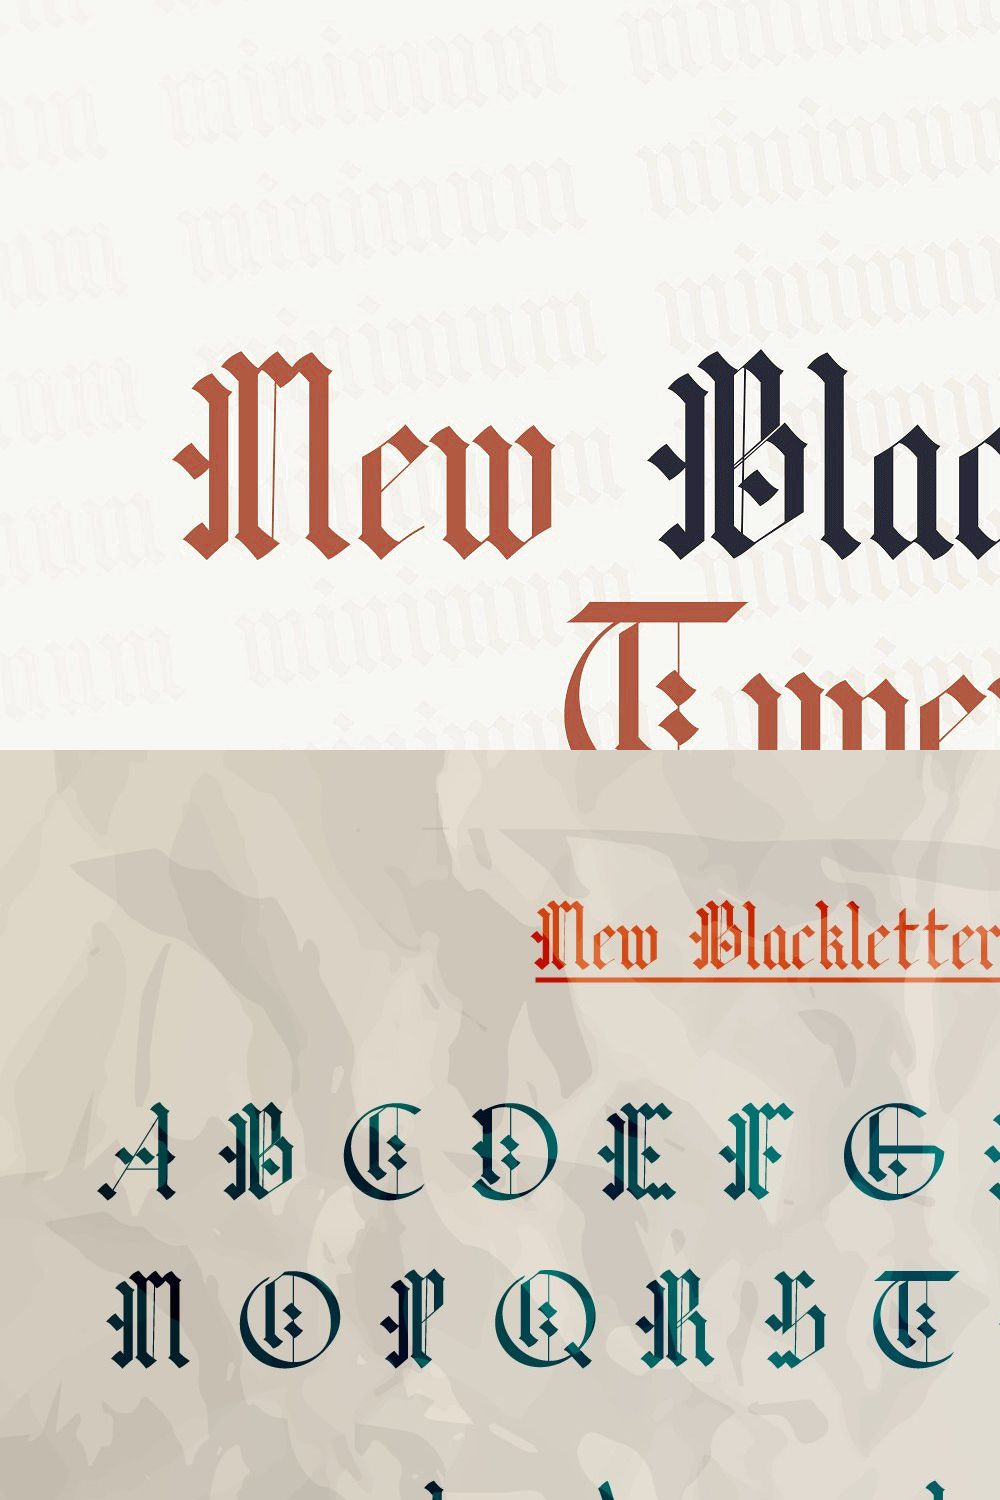 New Blackletter Typeface font. pinterest preview image.